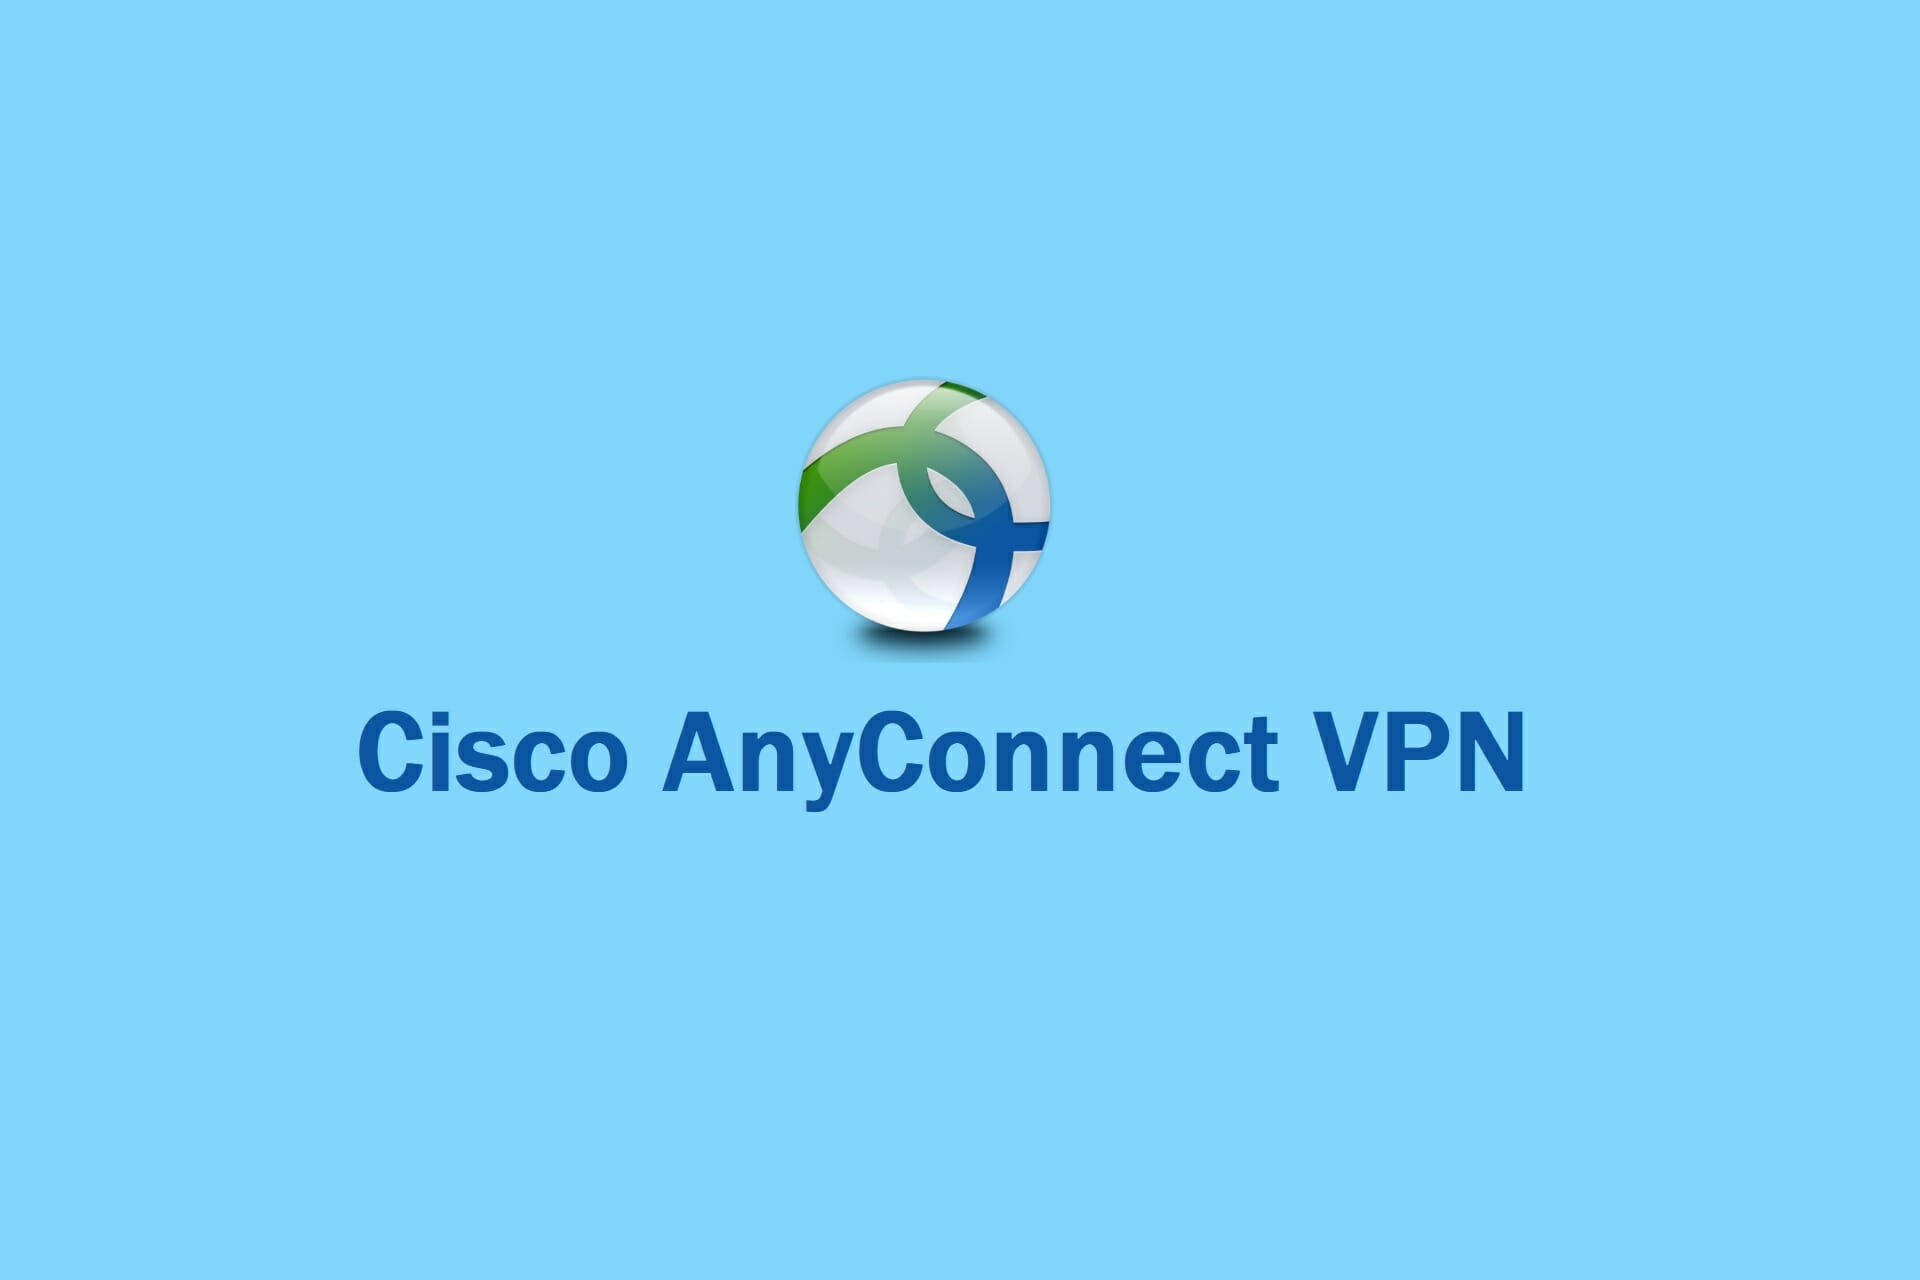 Cisco anyconnect windows 7 32 bit download crack